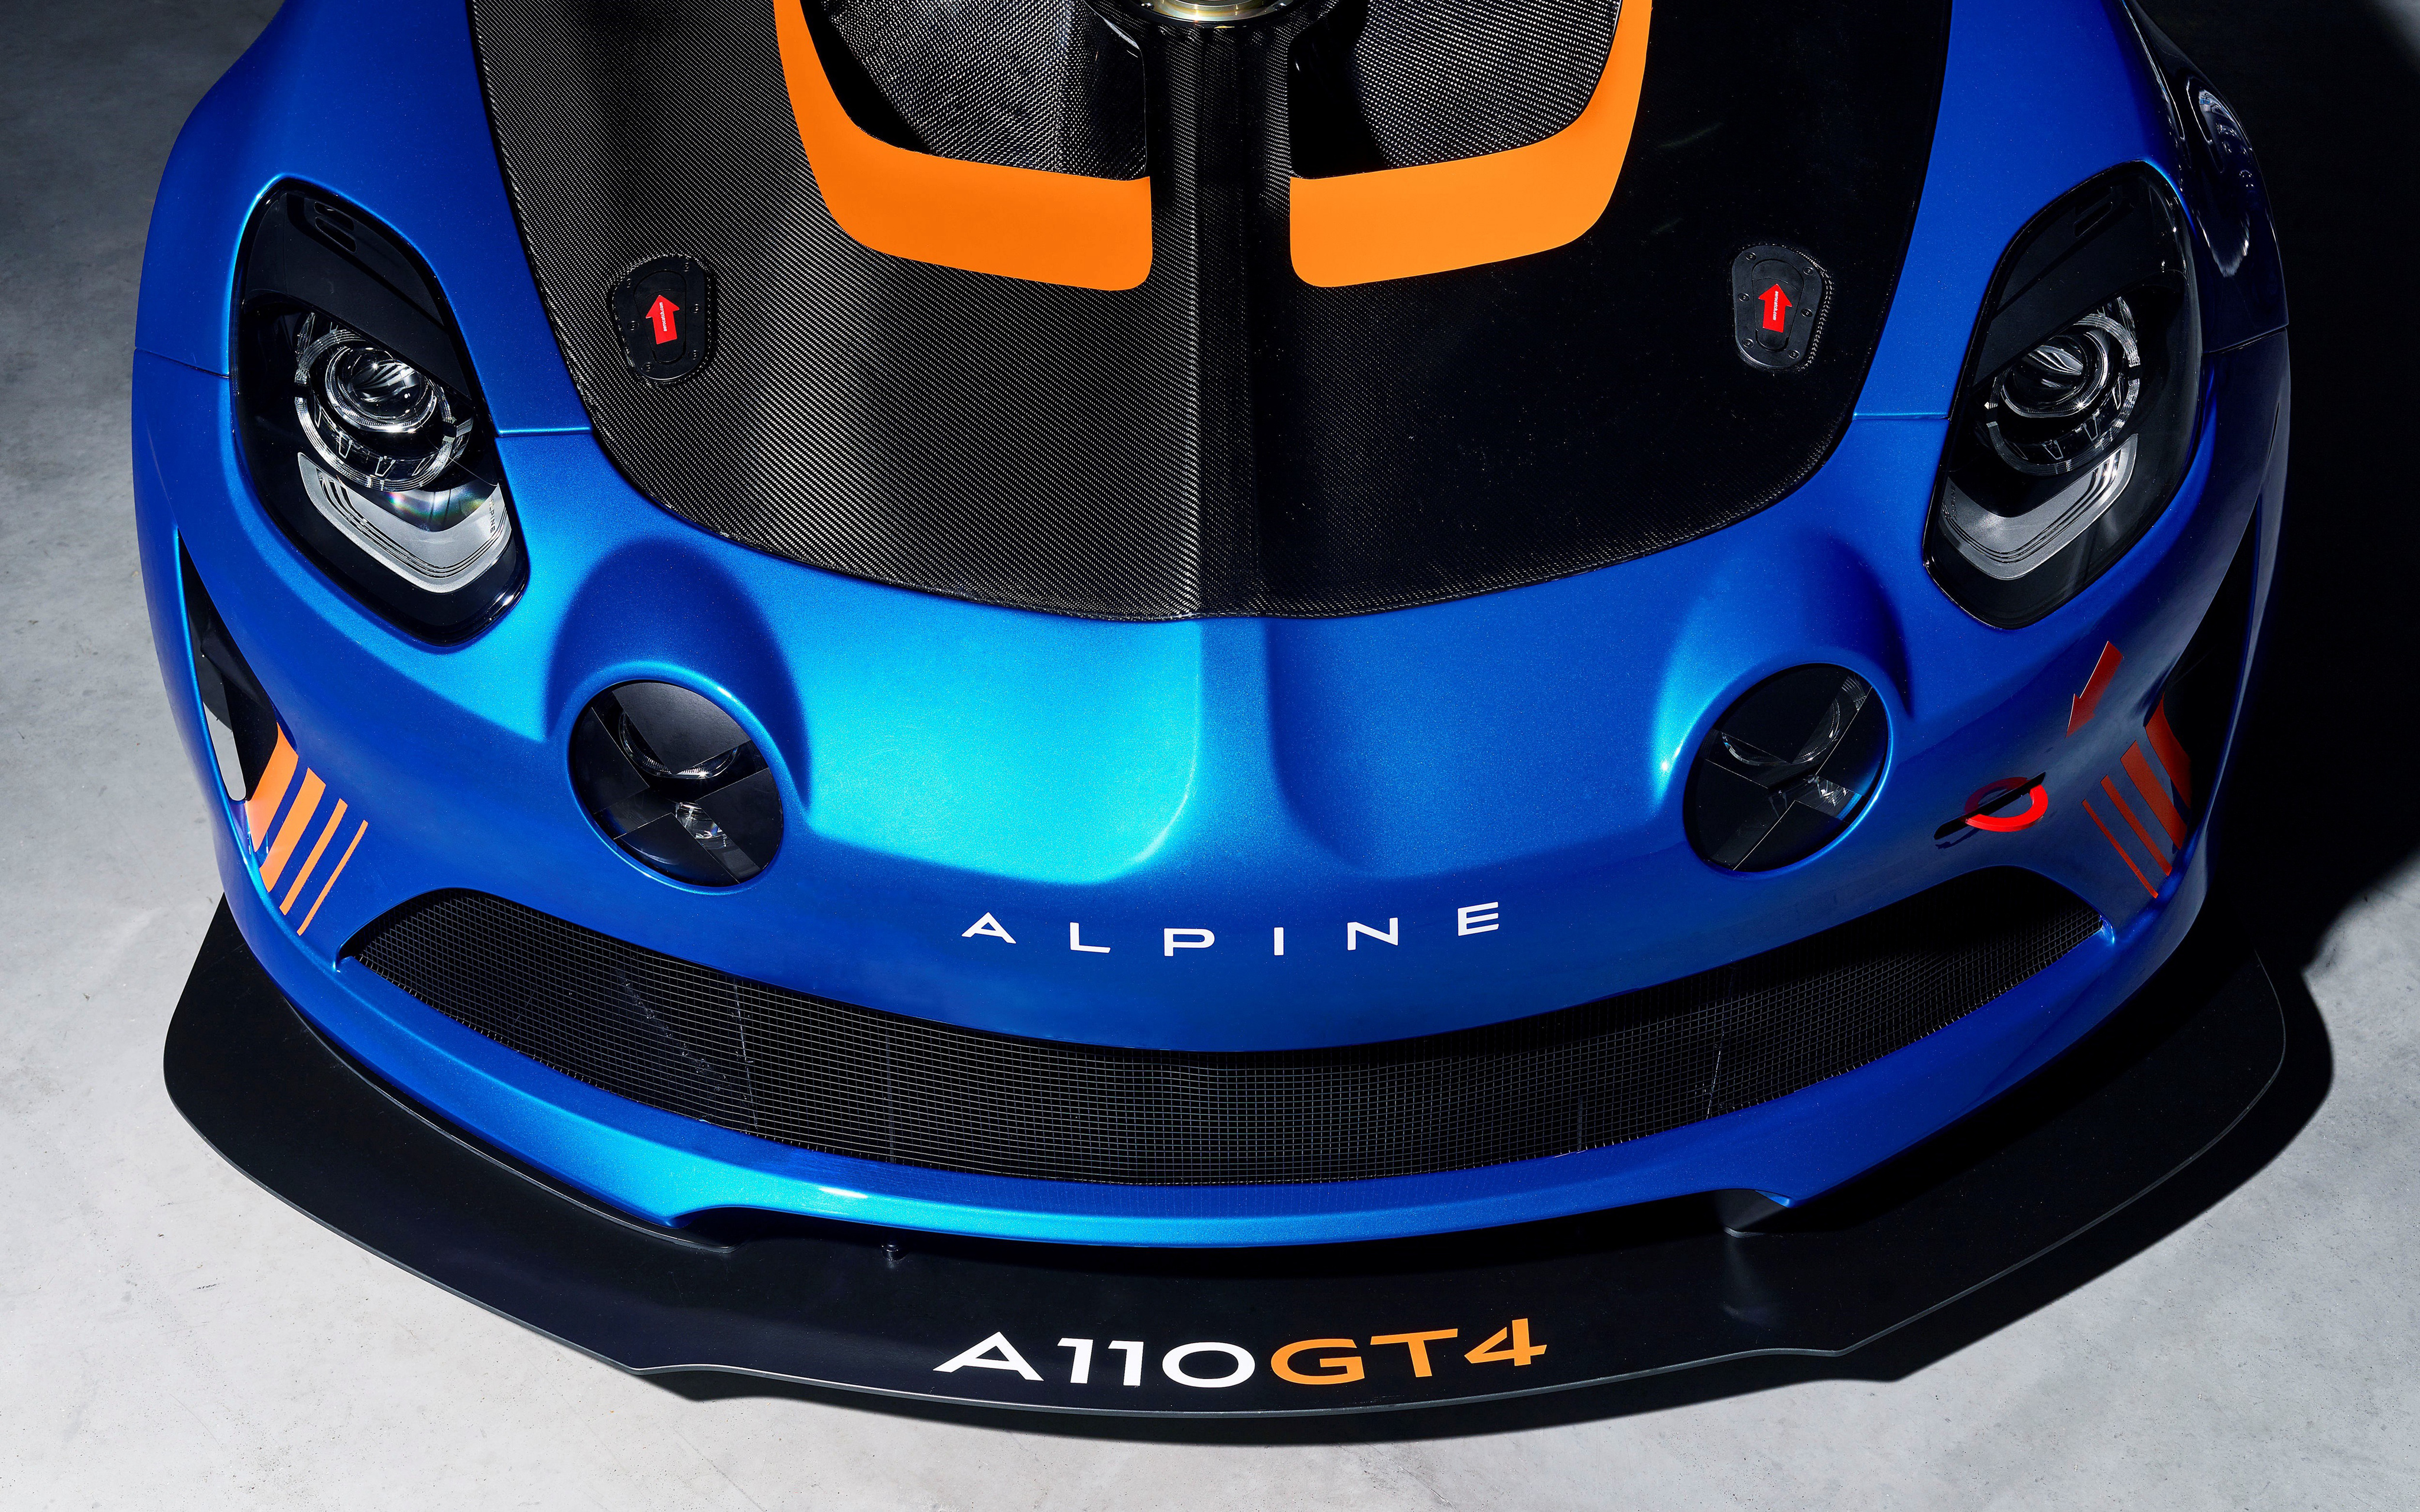 Alpine A110 GT4 Geneva Motor Show 2018 4K Wallpapers